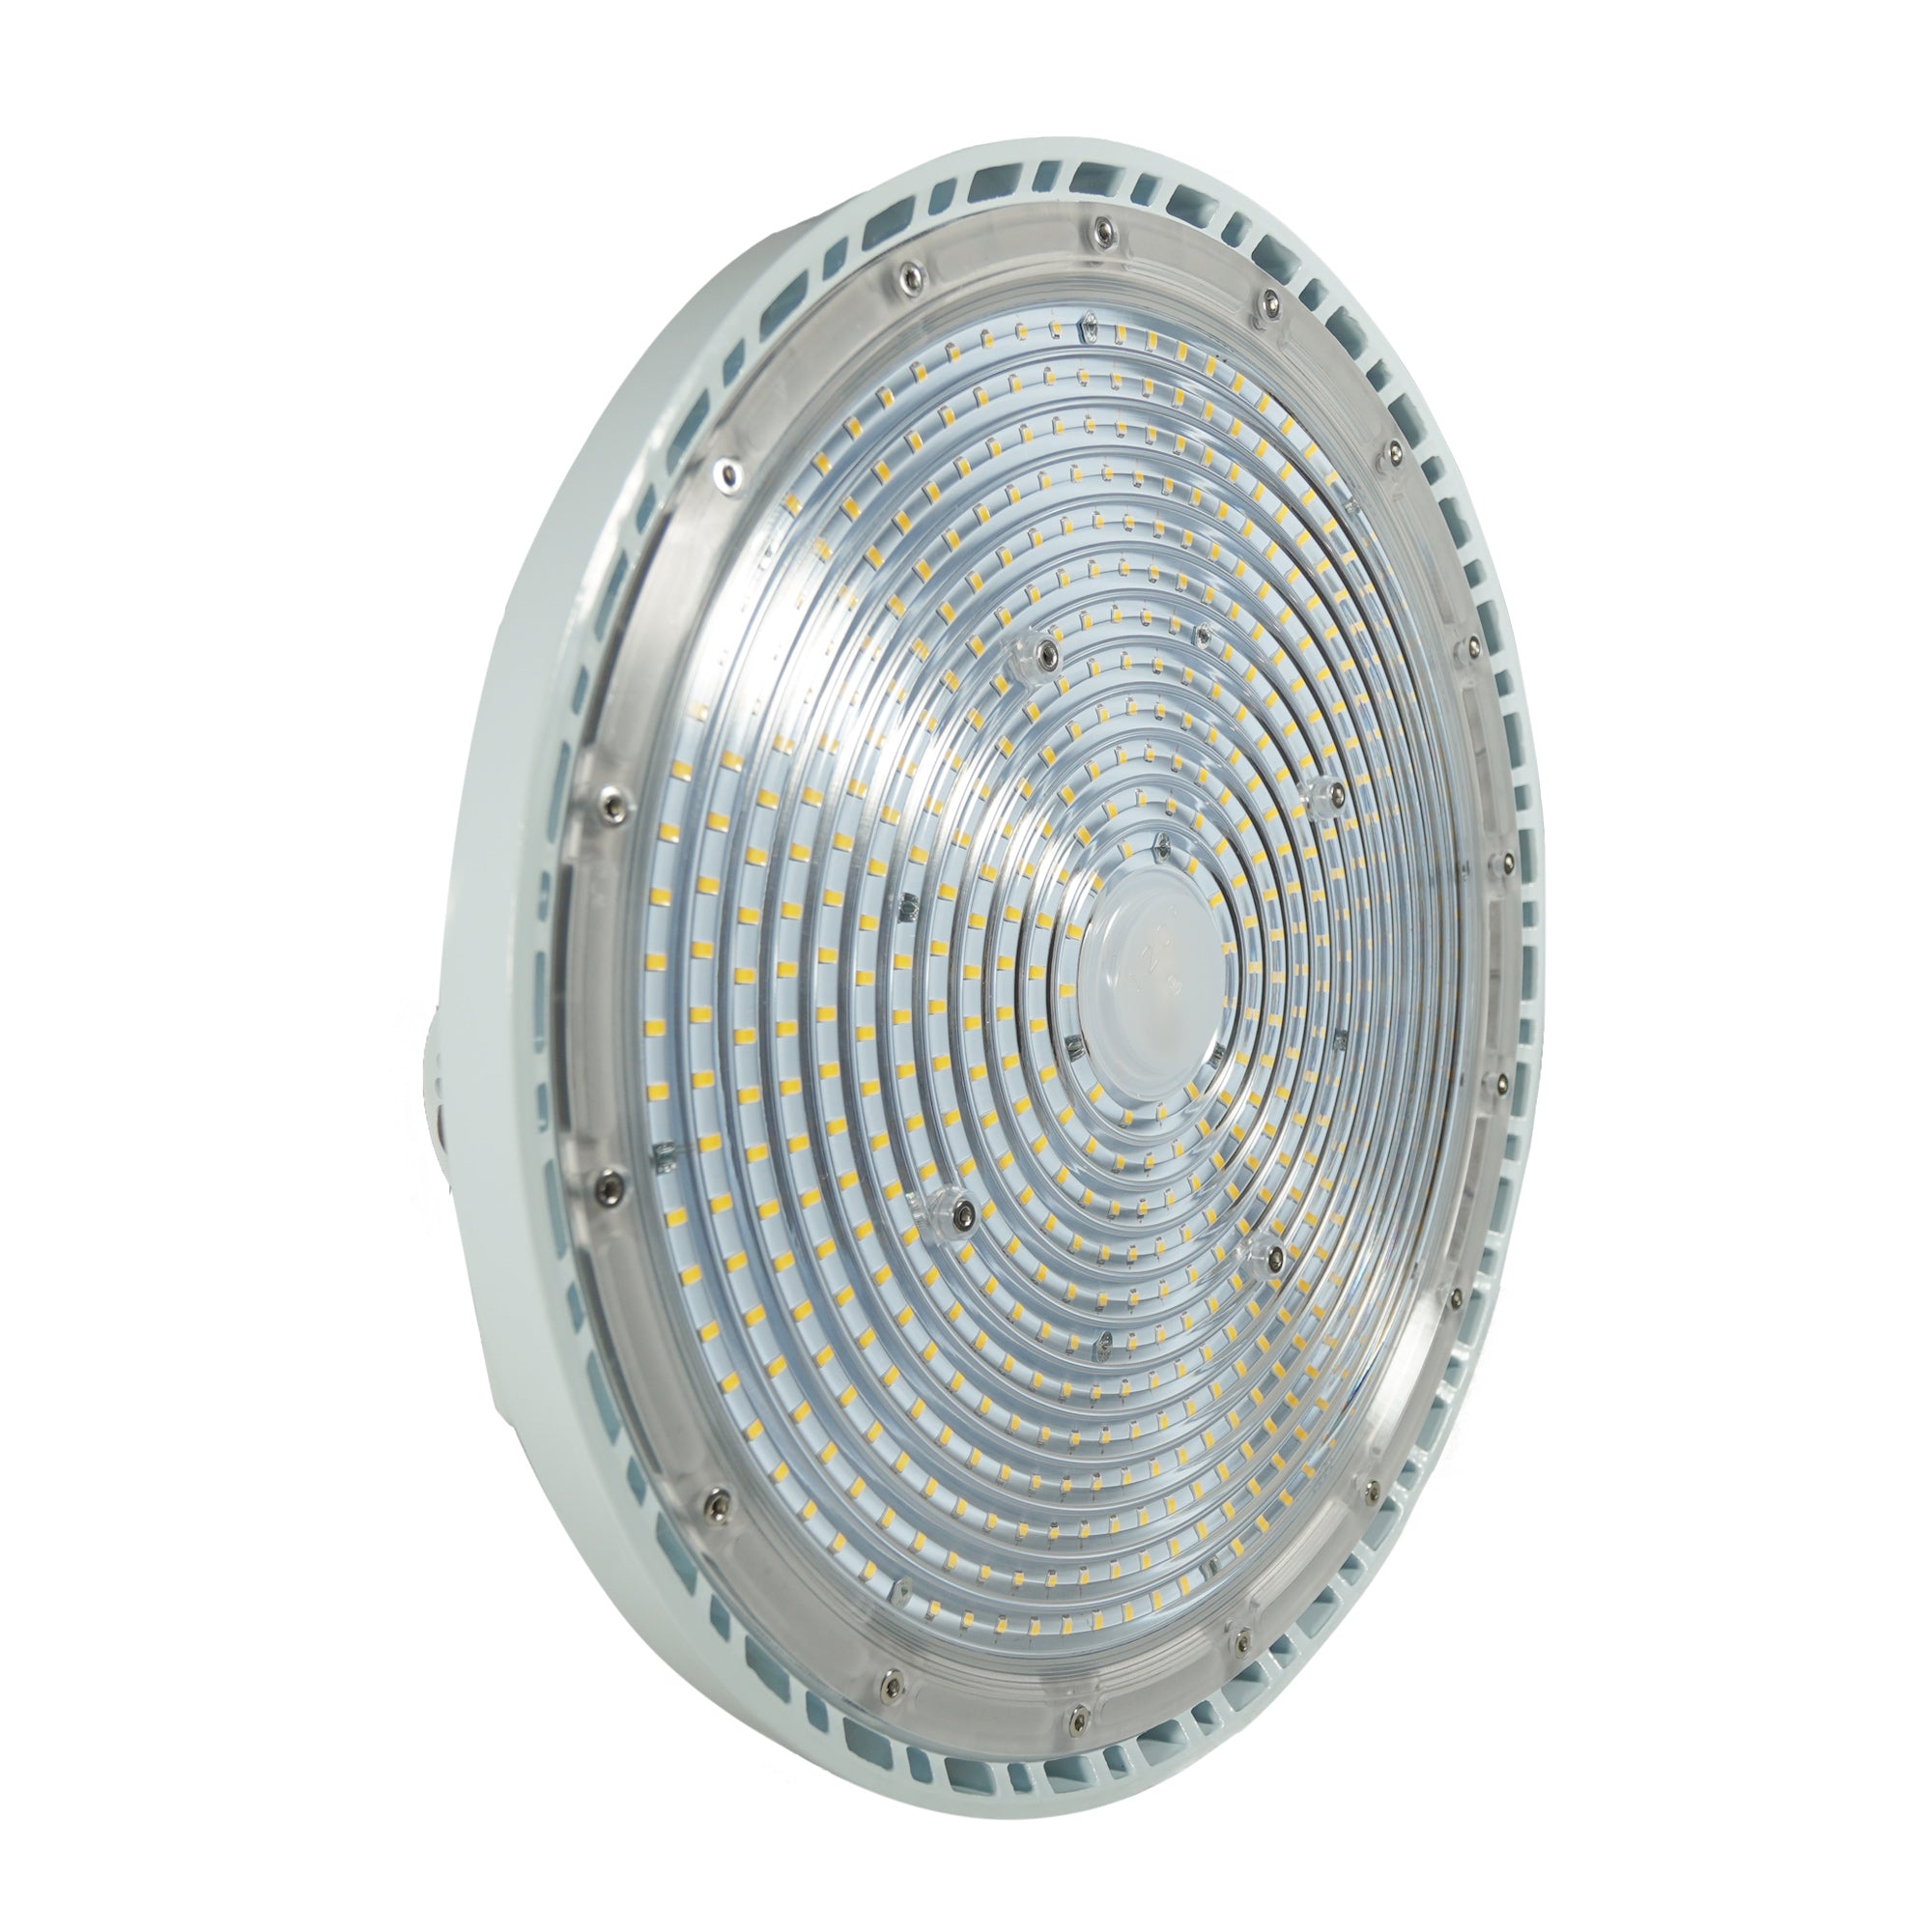 Luminario LED Industrial de Alto Rendimiento para Exteriores - Modelo TL-7000.HB50120